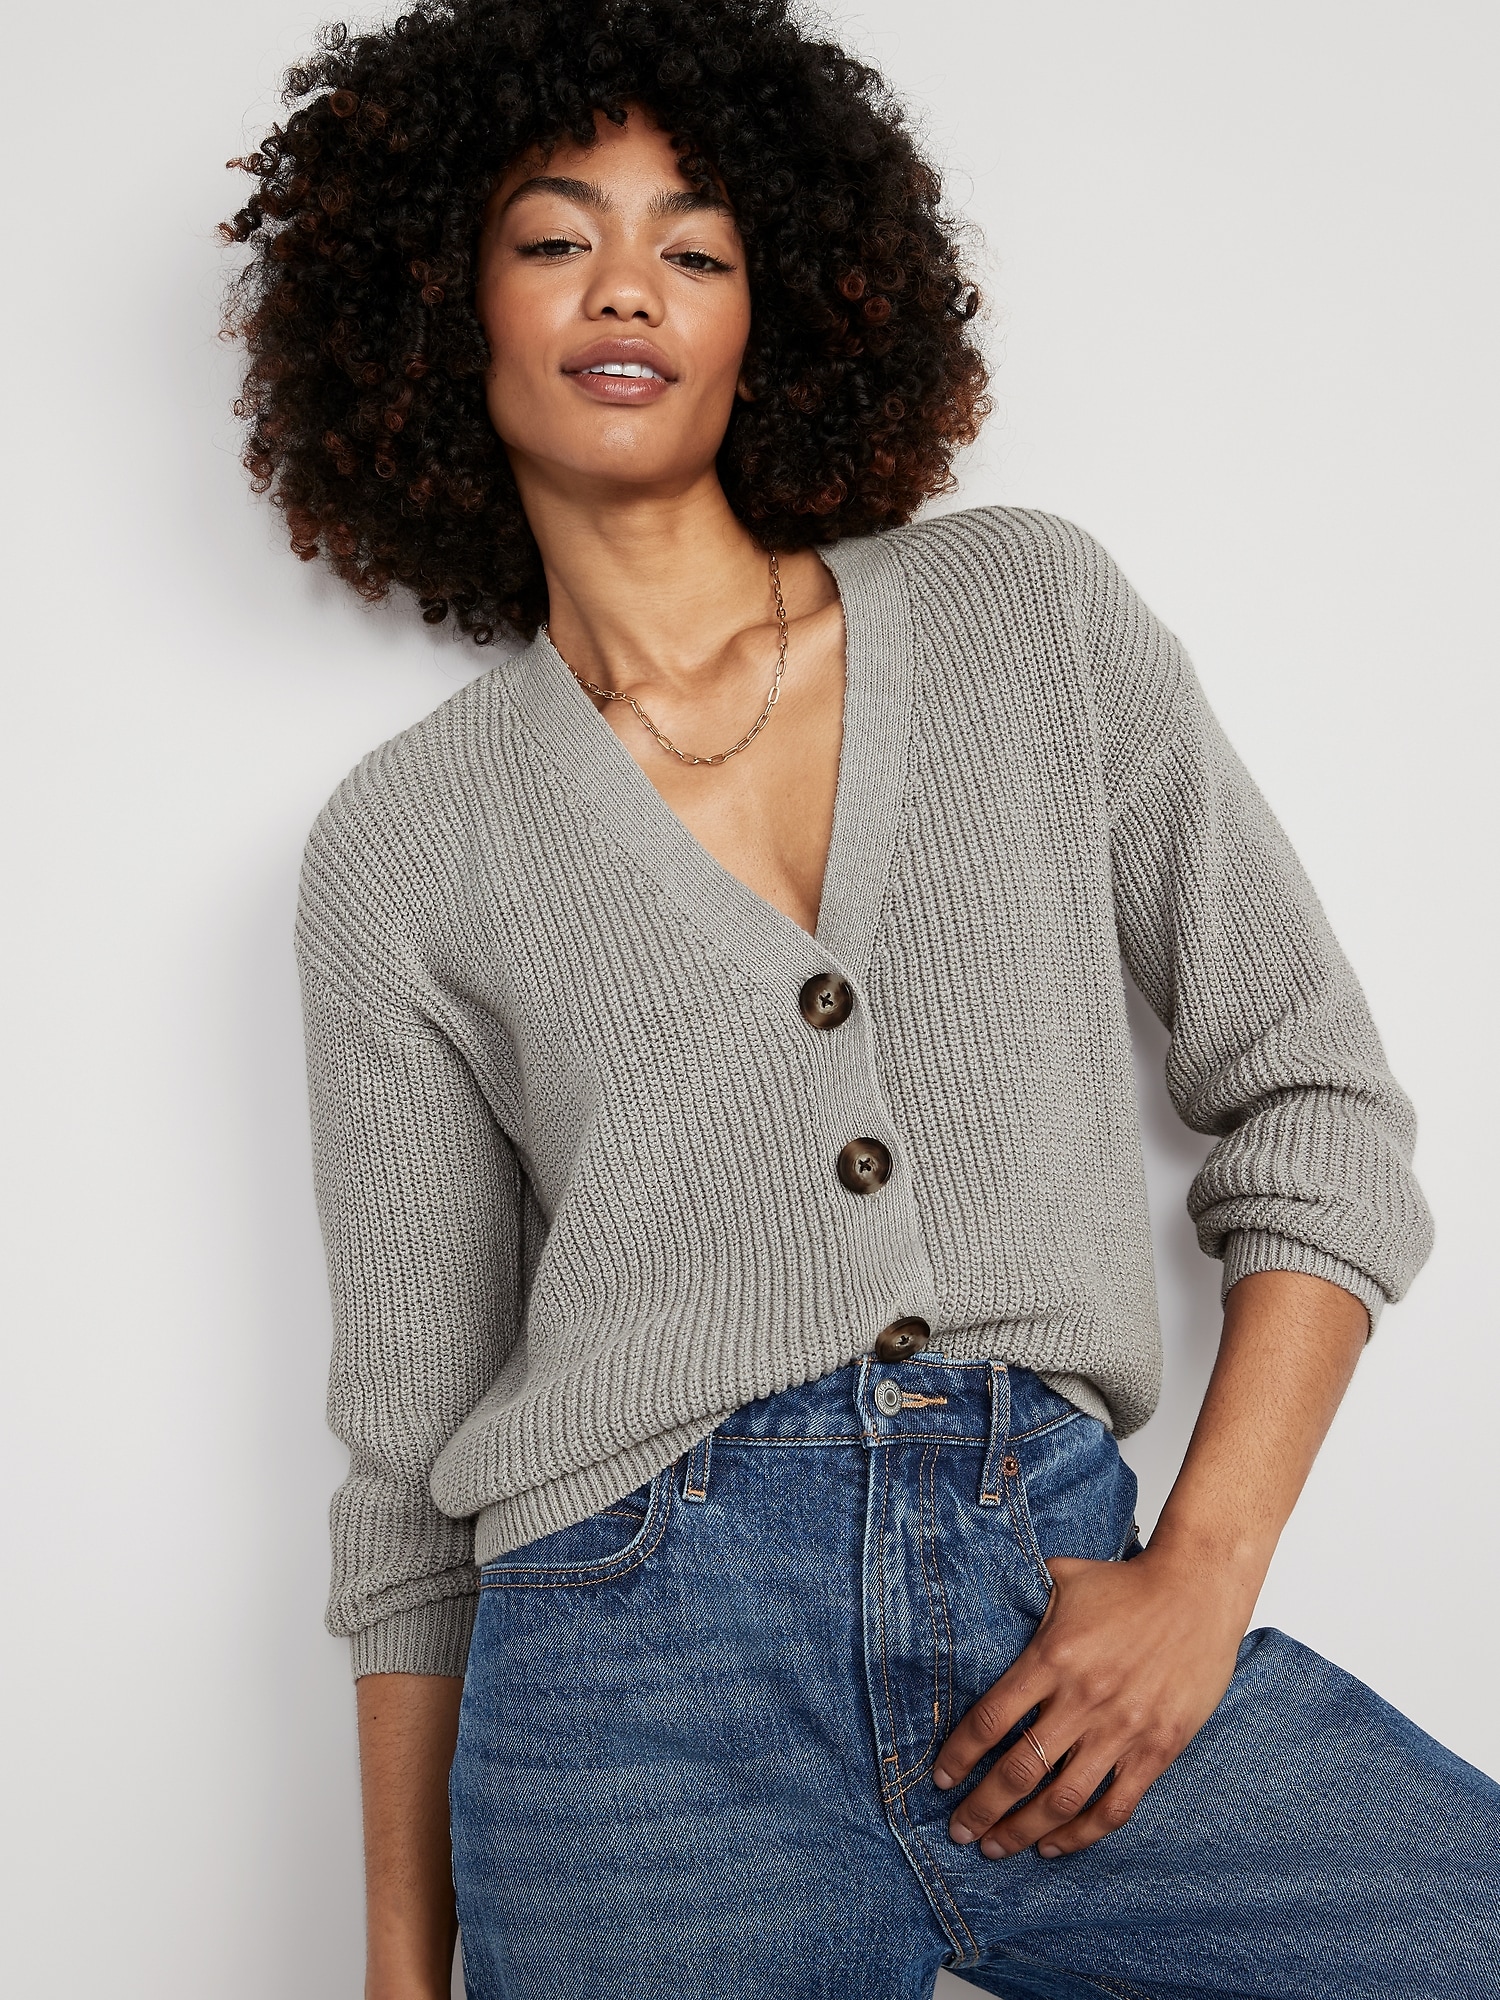 Shaker-Stitch Cardigan Sweater